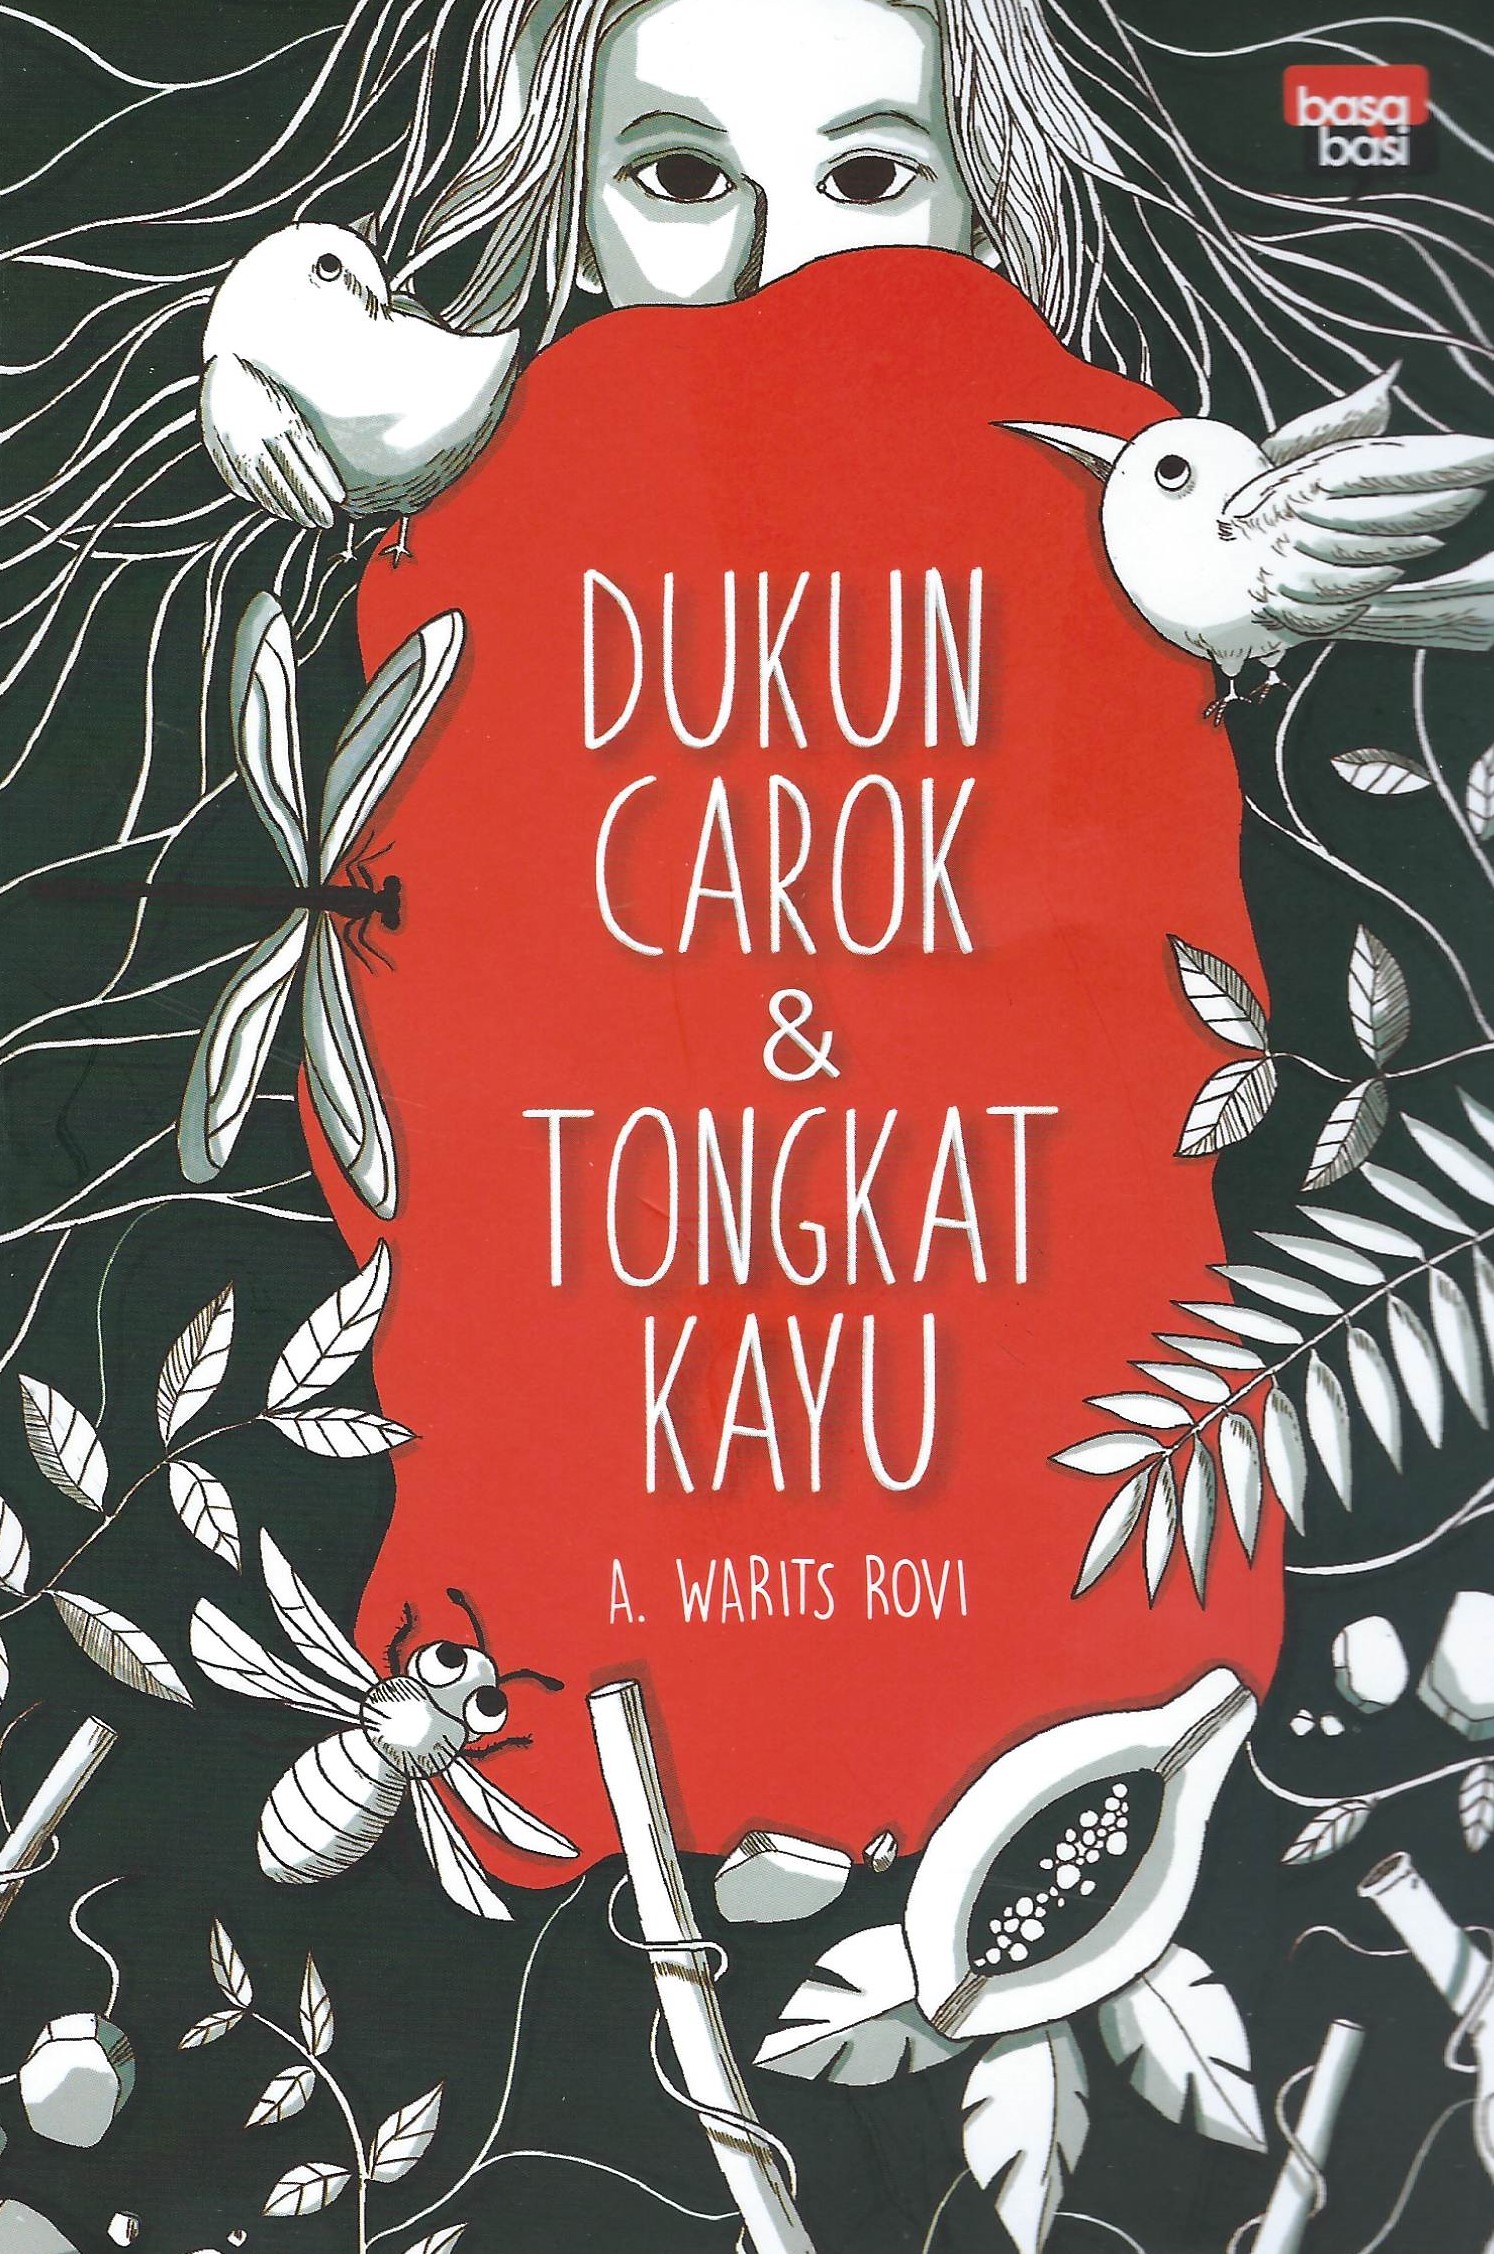 Dukun Carok & Tongkat Kayu